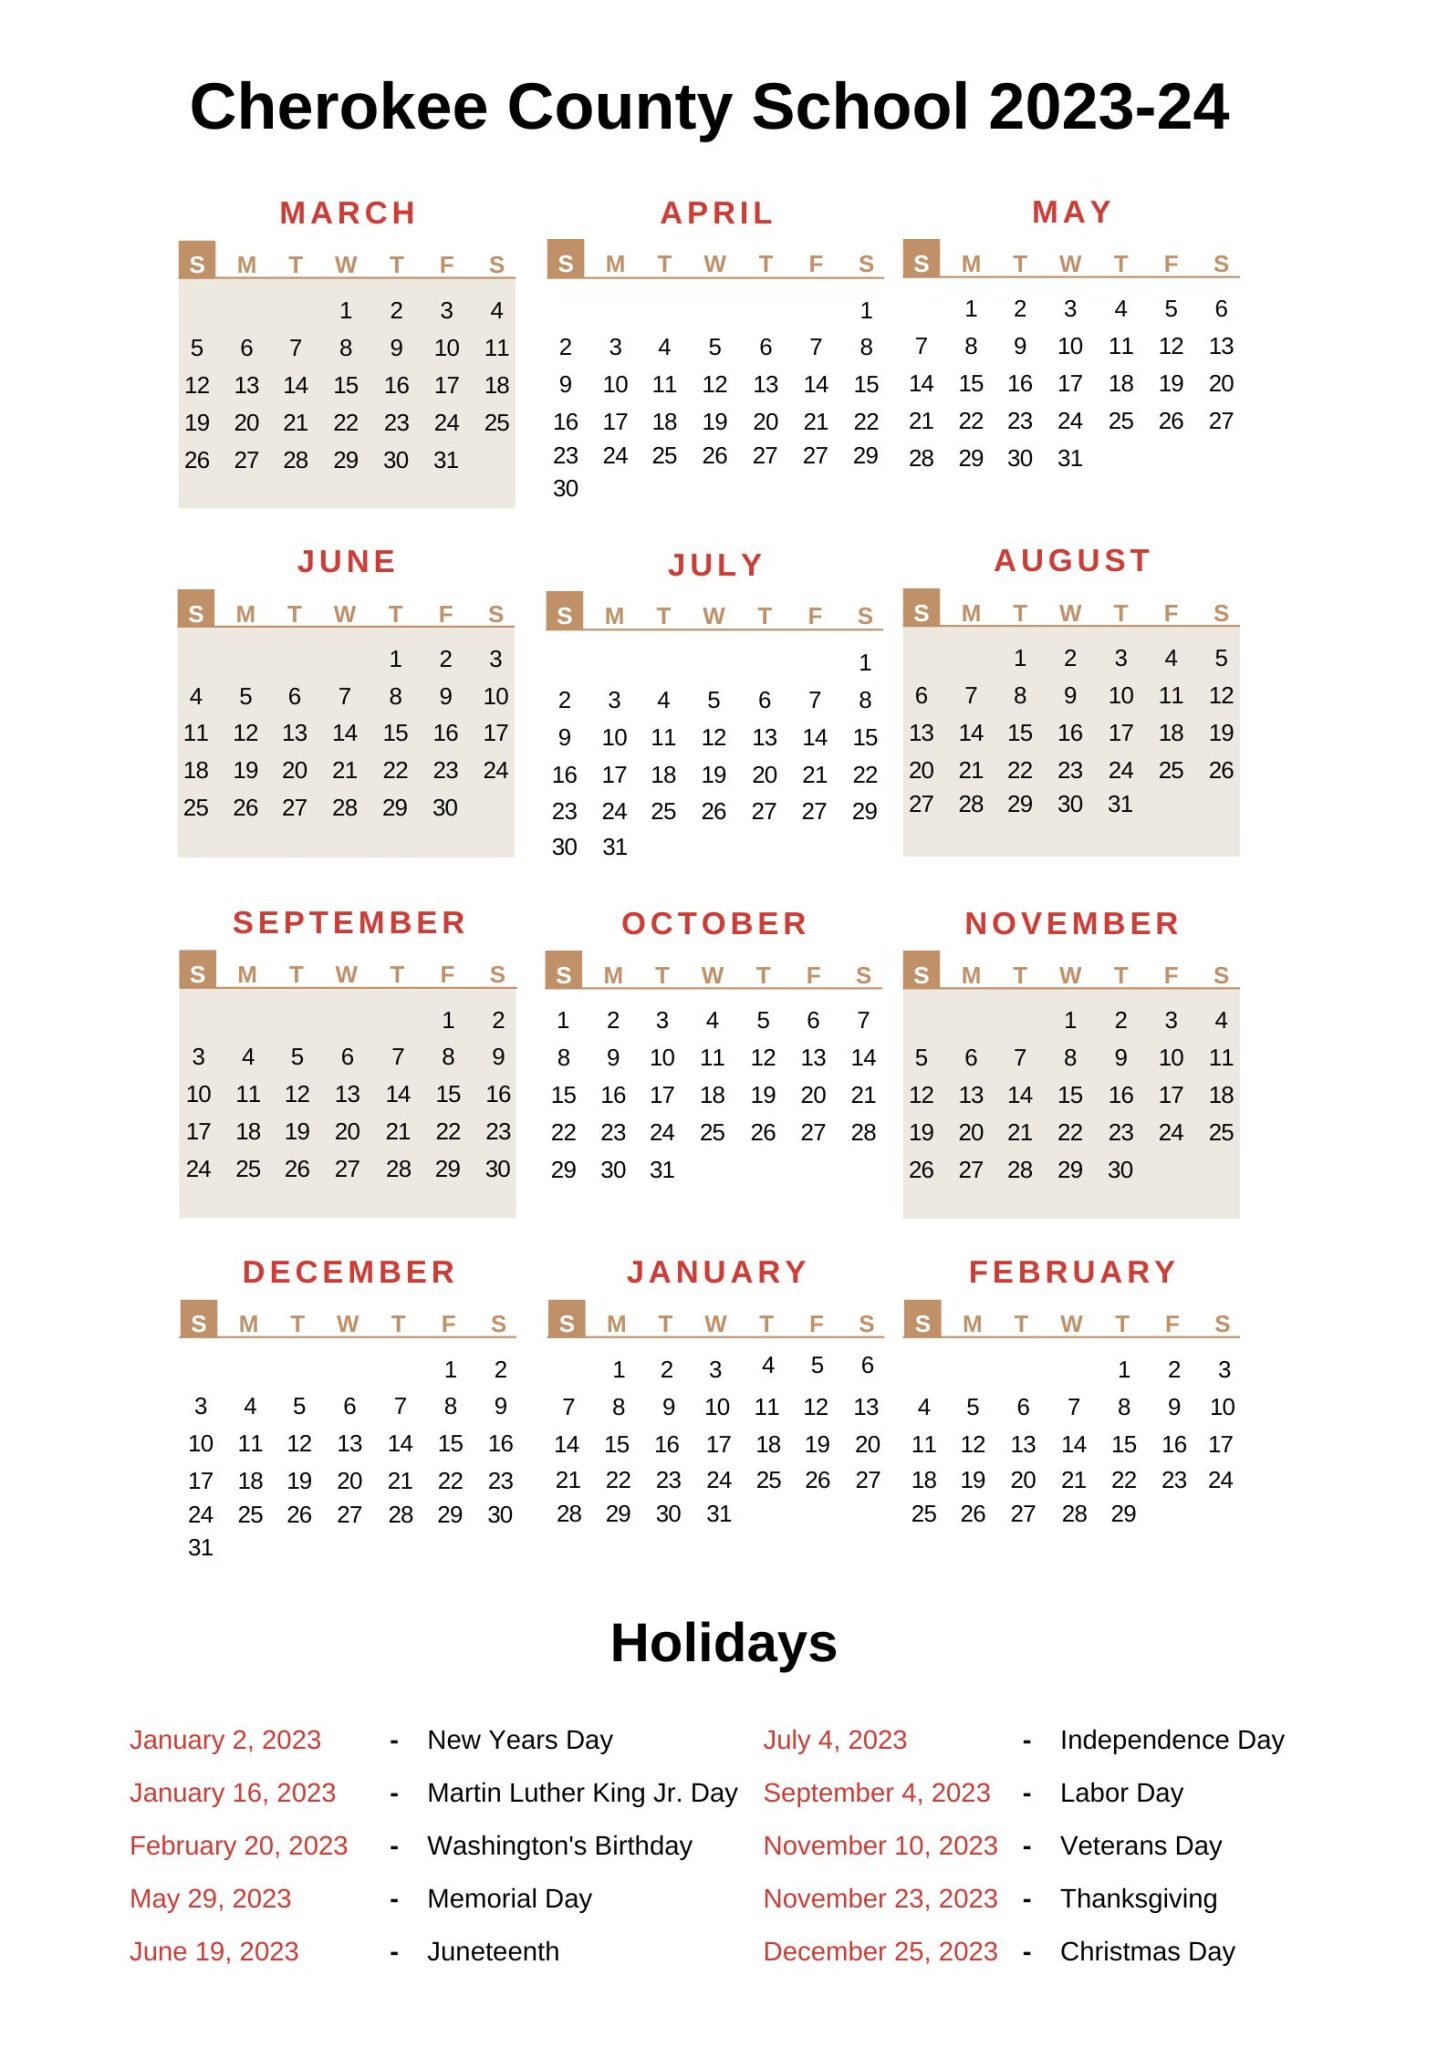 Cherokee County School Calendar (2022-2023) With Holidays